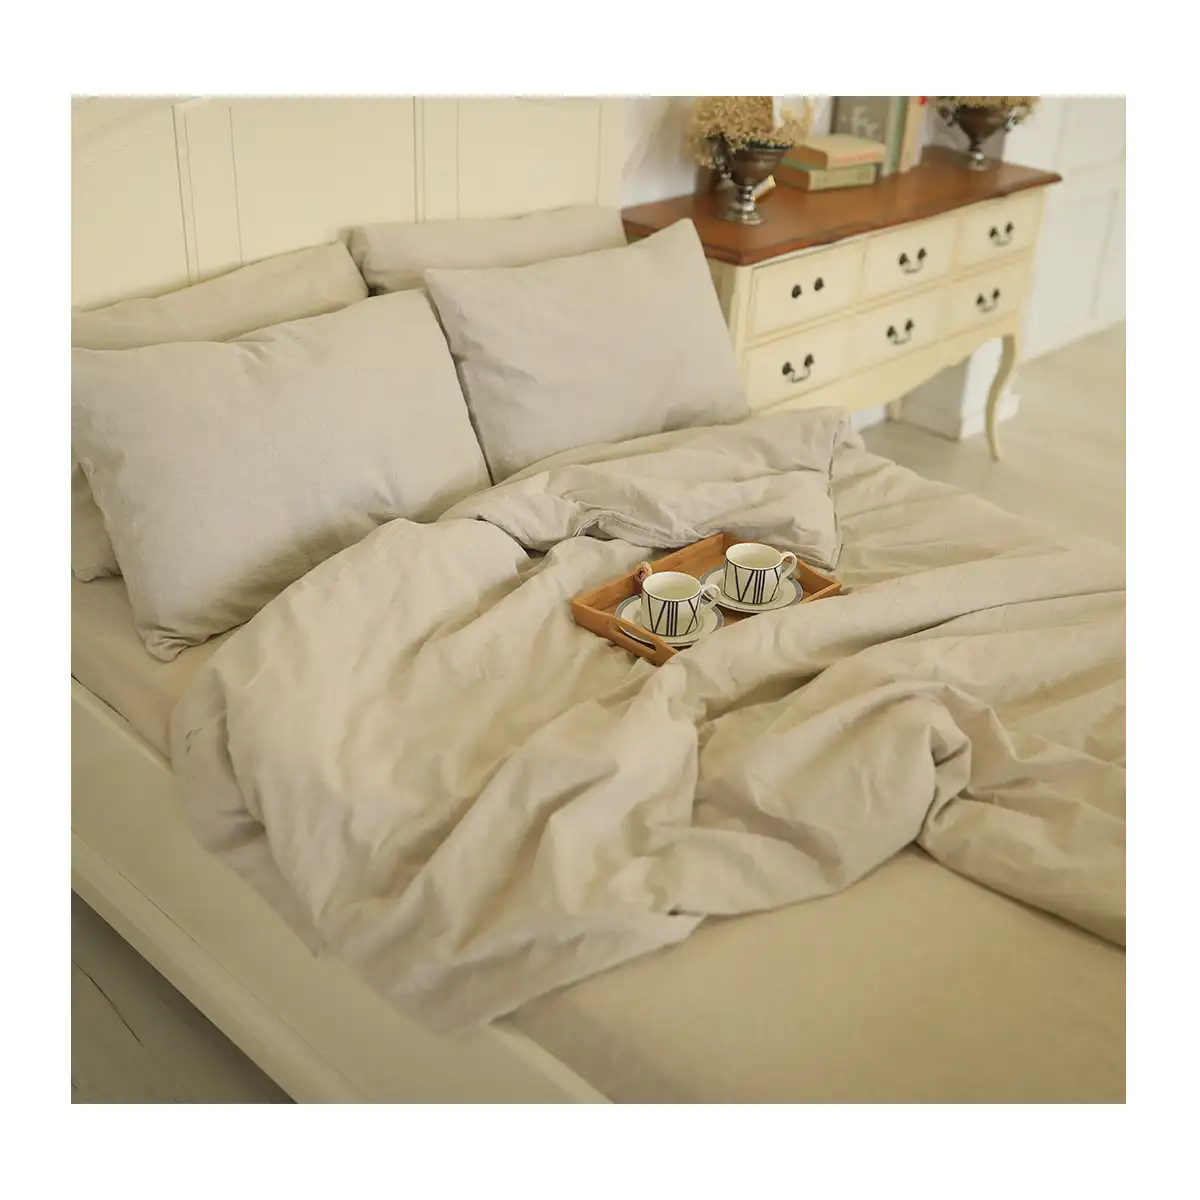 Fundas de almohada de lino 100% hipoalergénicas, ropa de cama ecológica de alta calidad, tamaño XL, dover